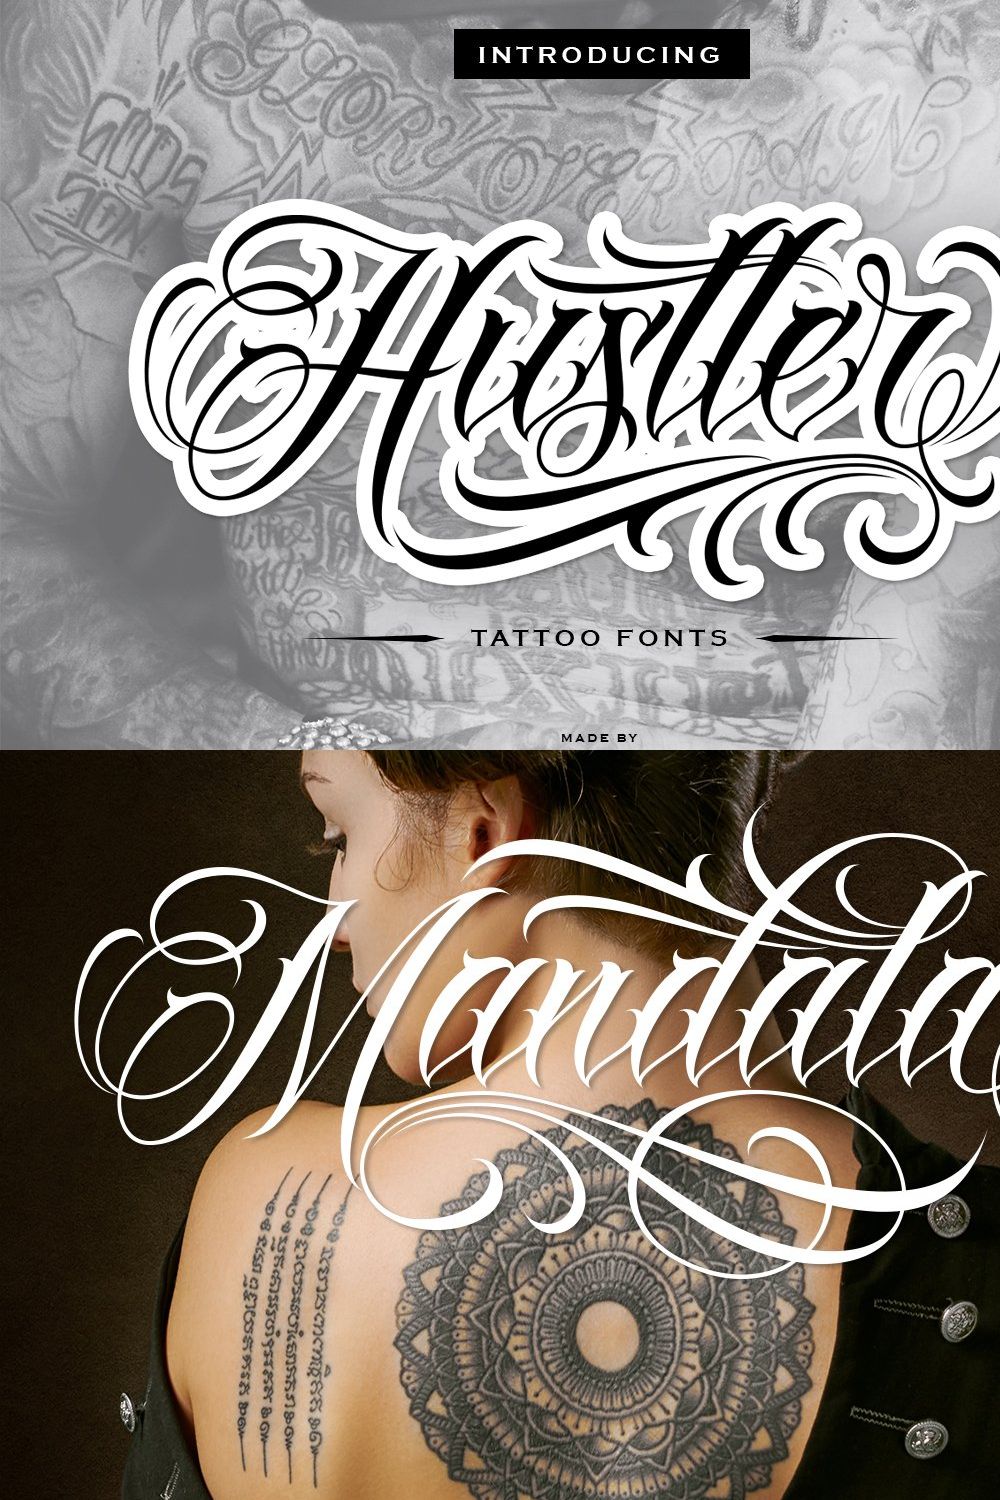 Hustler | Tattoo Style pinterest preview image.